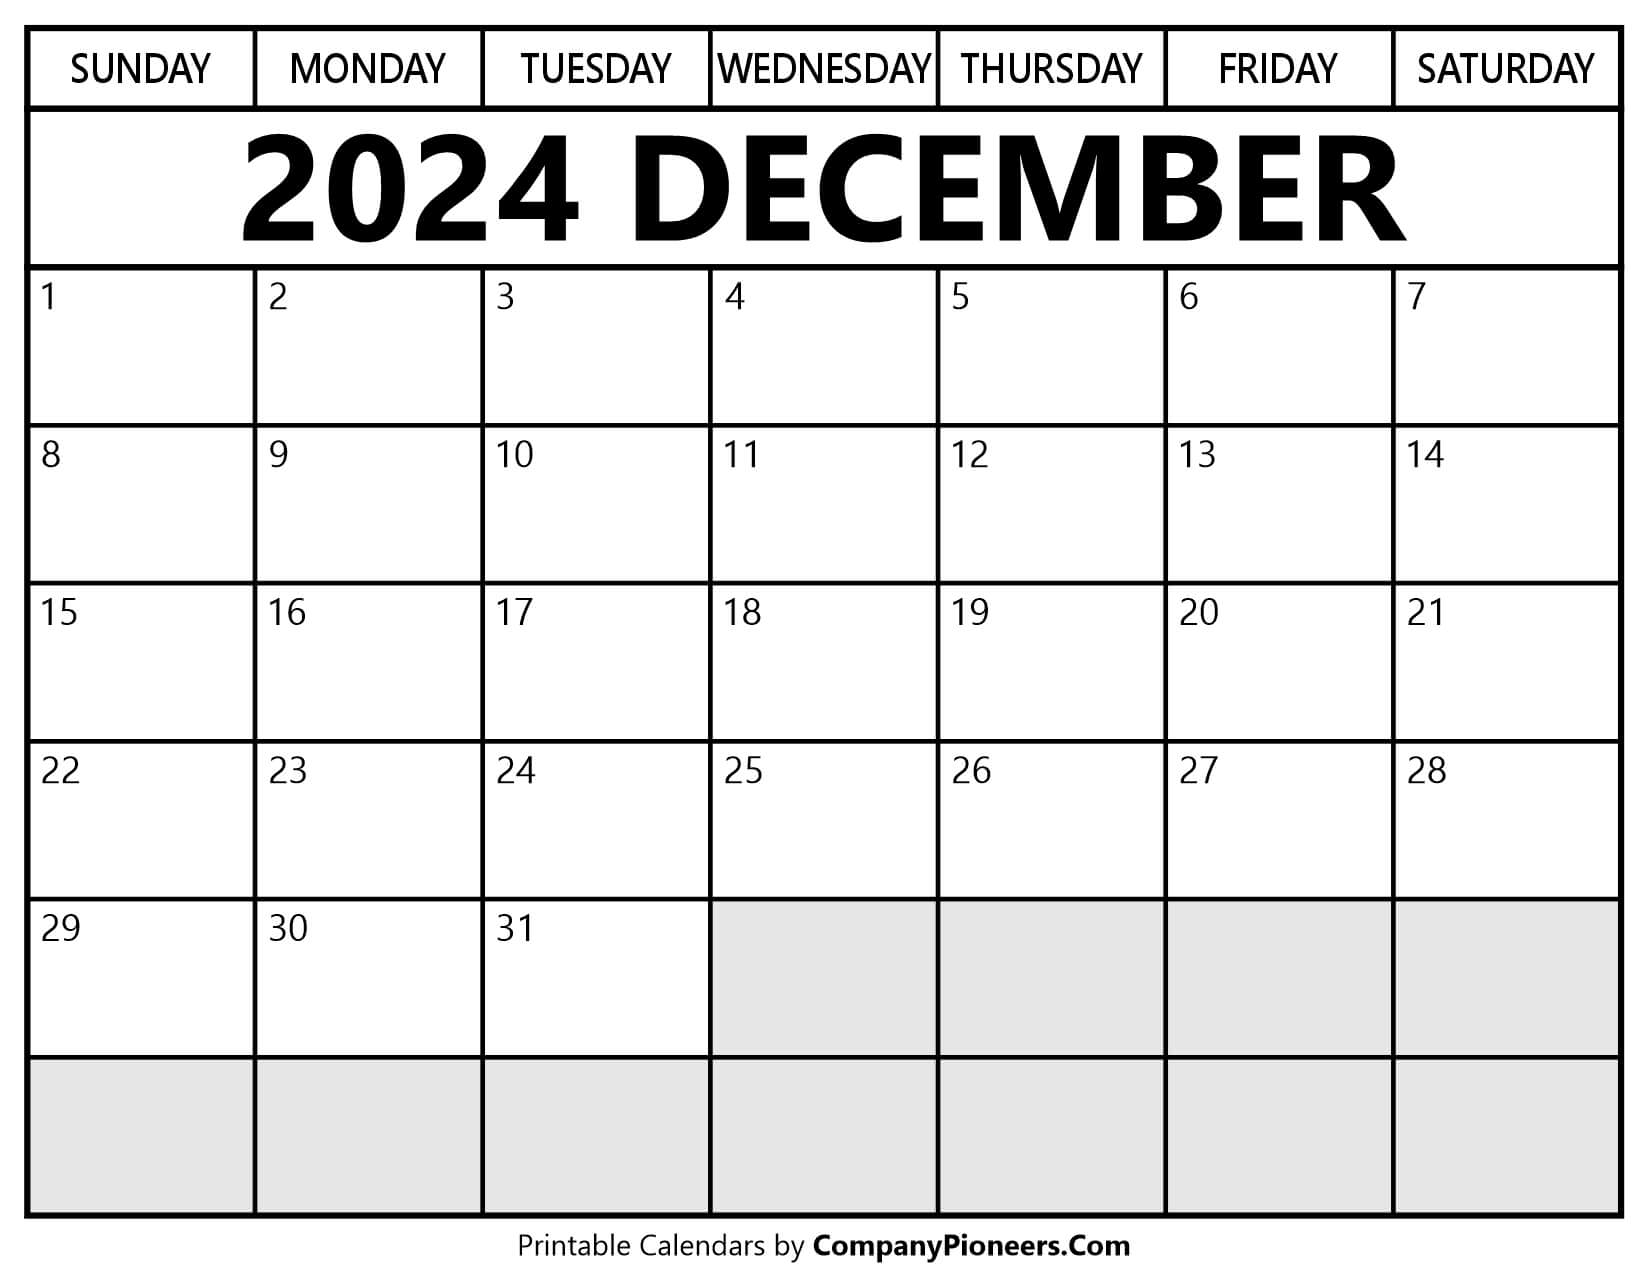 December 2024 Calendar Segoe UI Font